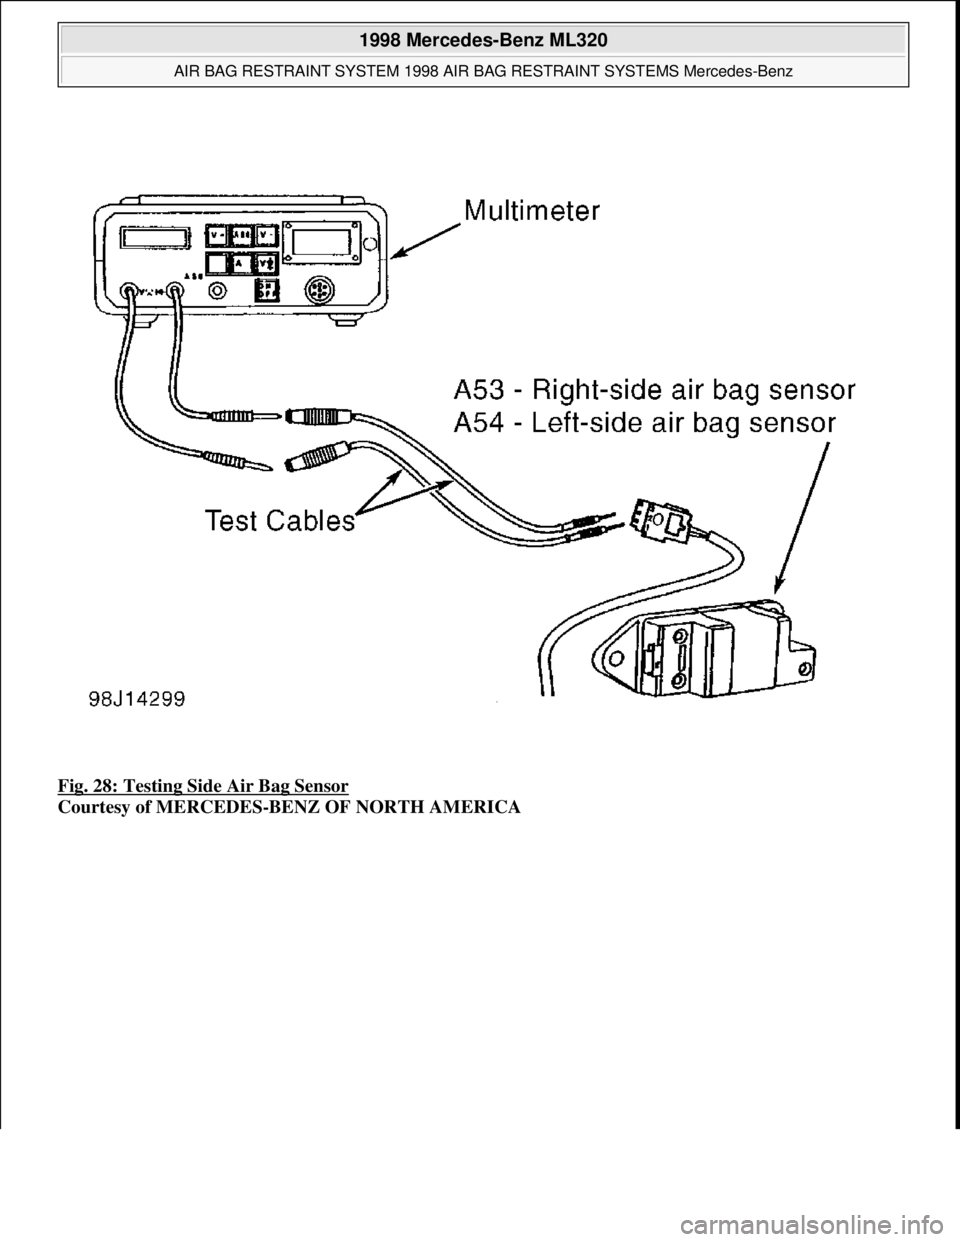 MERCEDES-BENZ ML500 1997  Complete Repair Manual Fig. 28: Testing Side Air Bag Sensor 
Courtesy of MERCEDES-BENZ OF NORTH AMERICA
 
1998 Mercedes-Benz ML320 
AIR BAG RESTRAINT SYSTEM 1998 AIR BAG RESTRAINT SYSTEMS Mercedes-Benz  
me  
Saturday, Octo